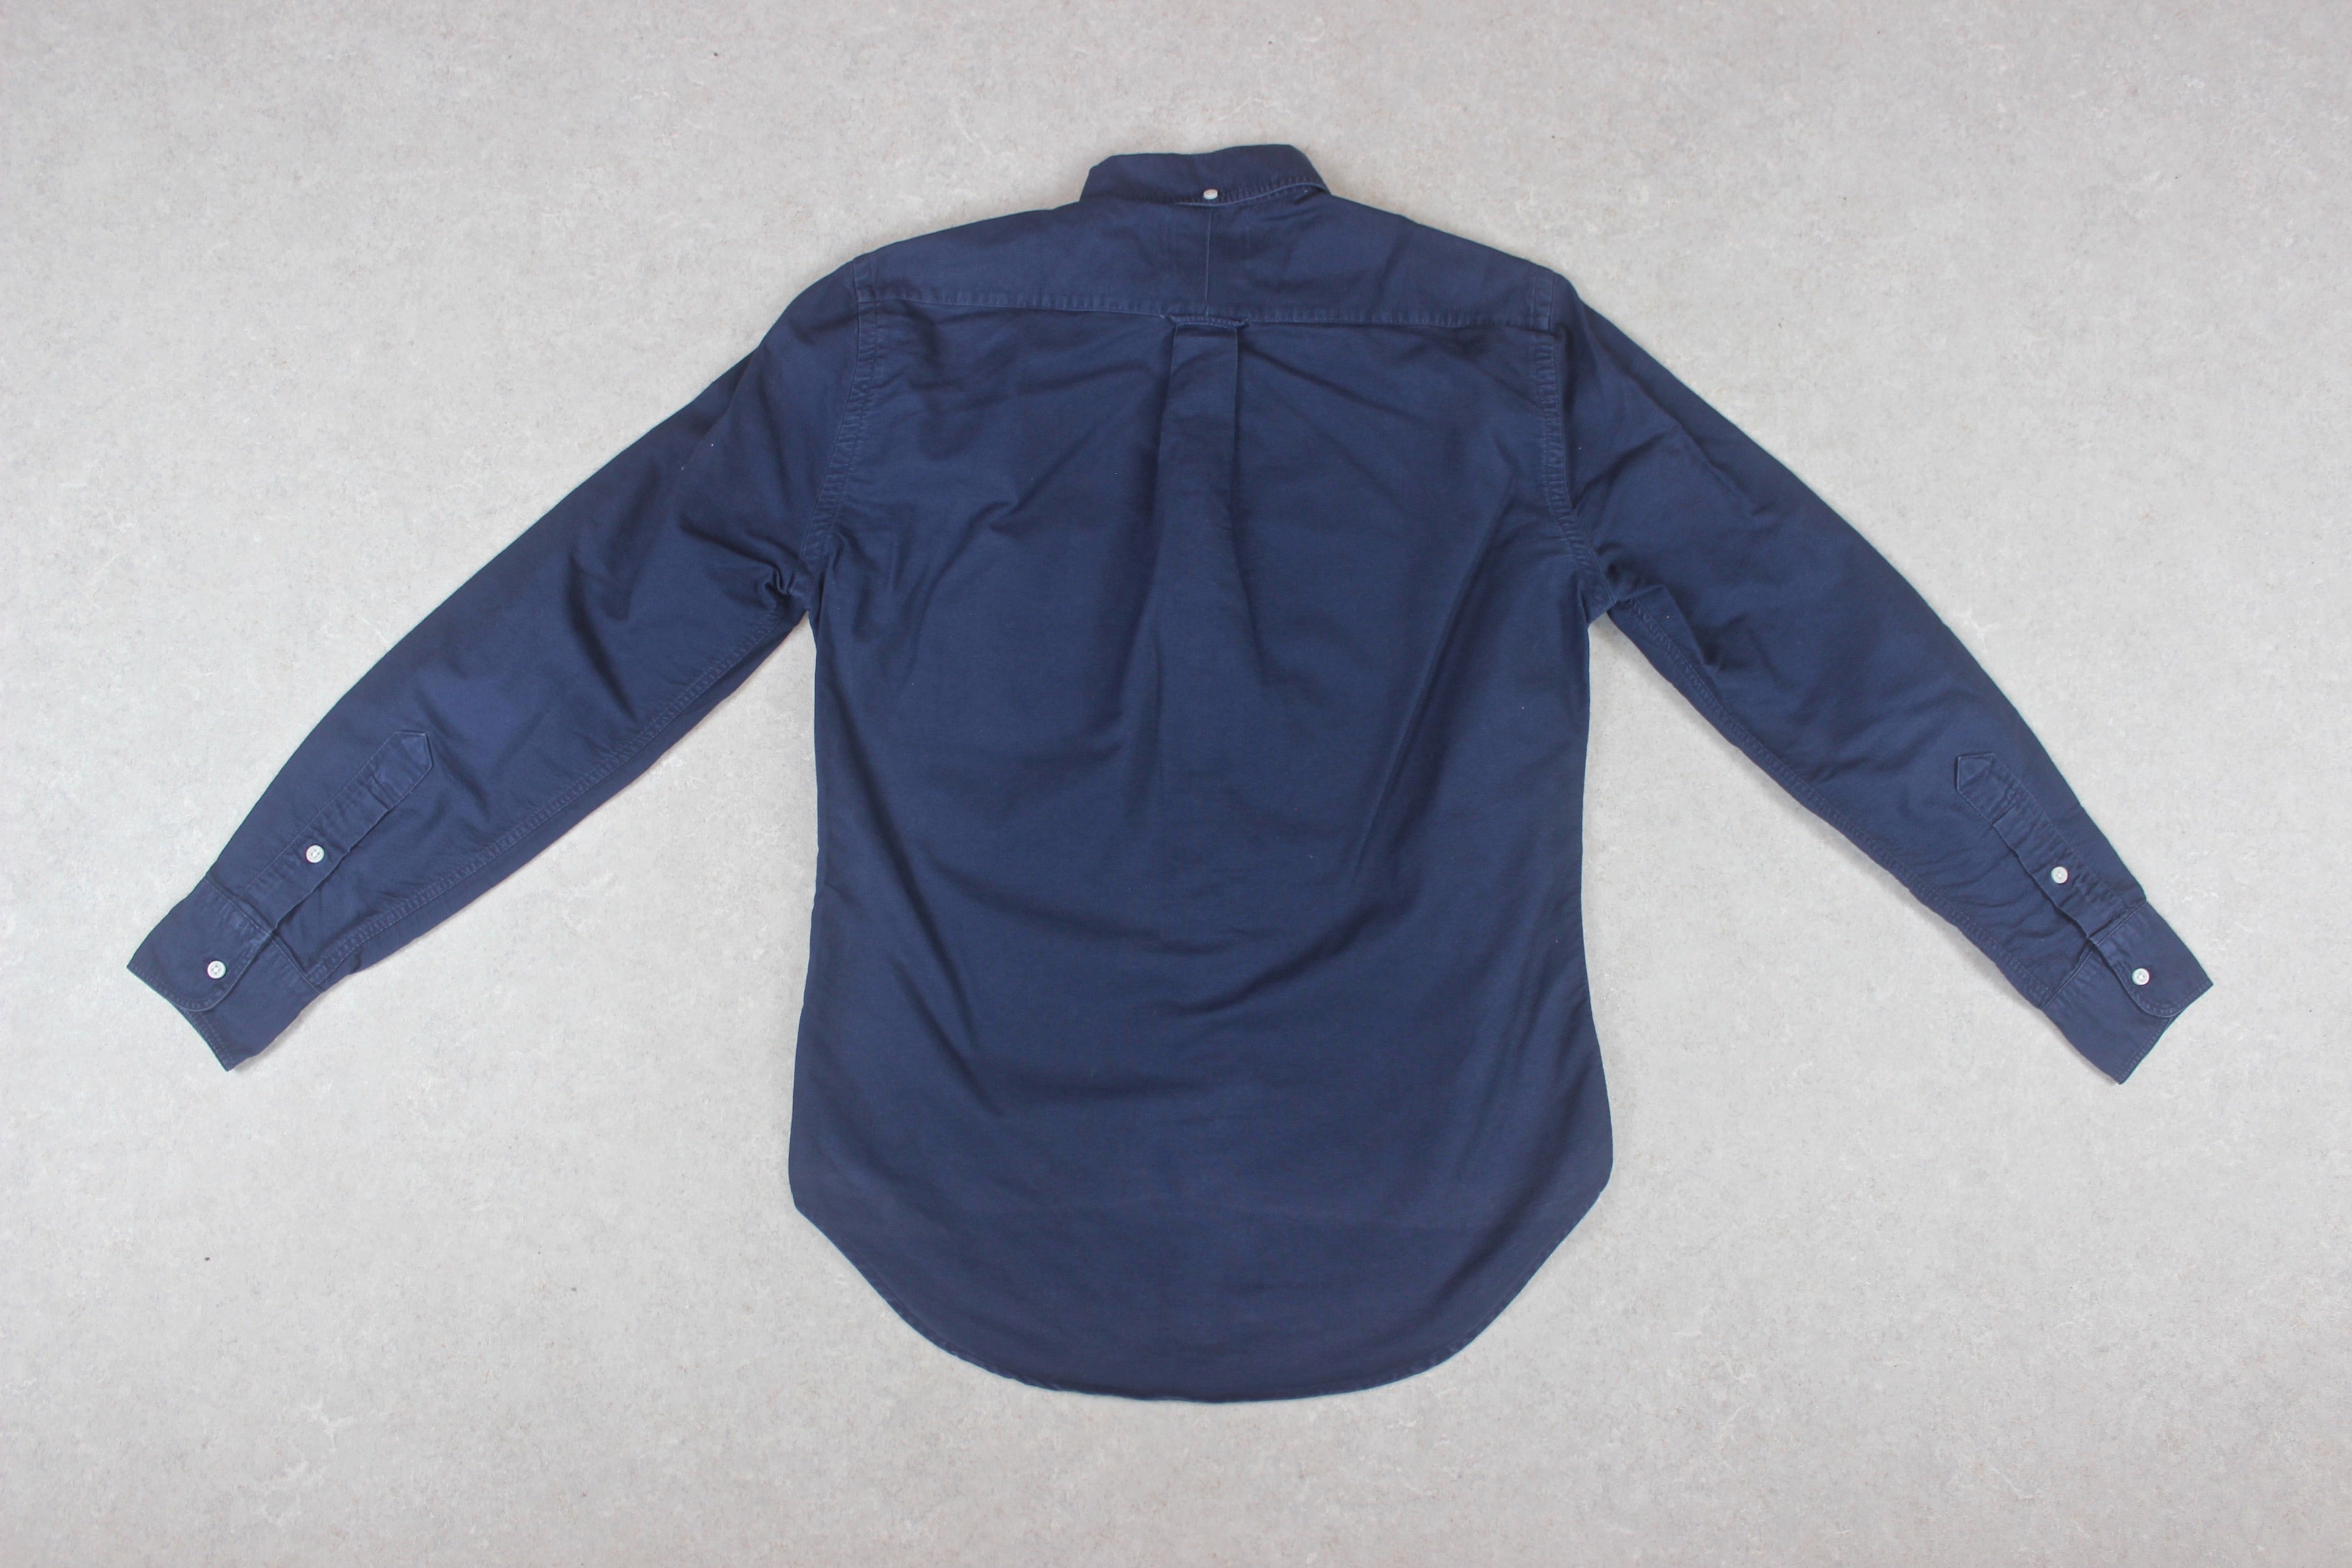 Gitman Bros Vintage - Shirt - Navy Blue - Small